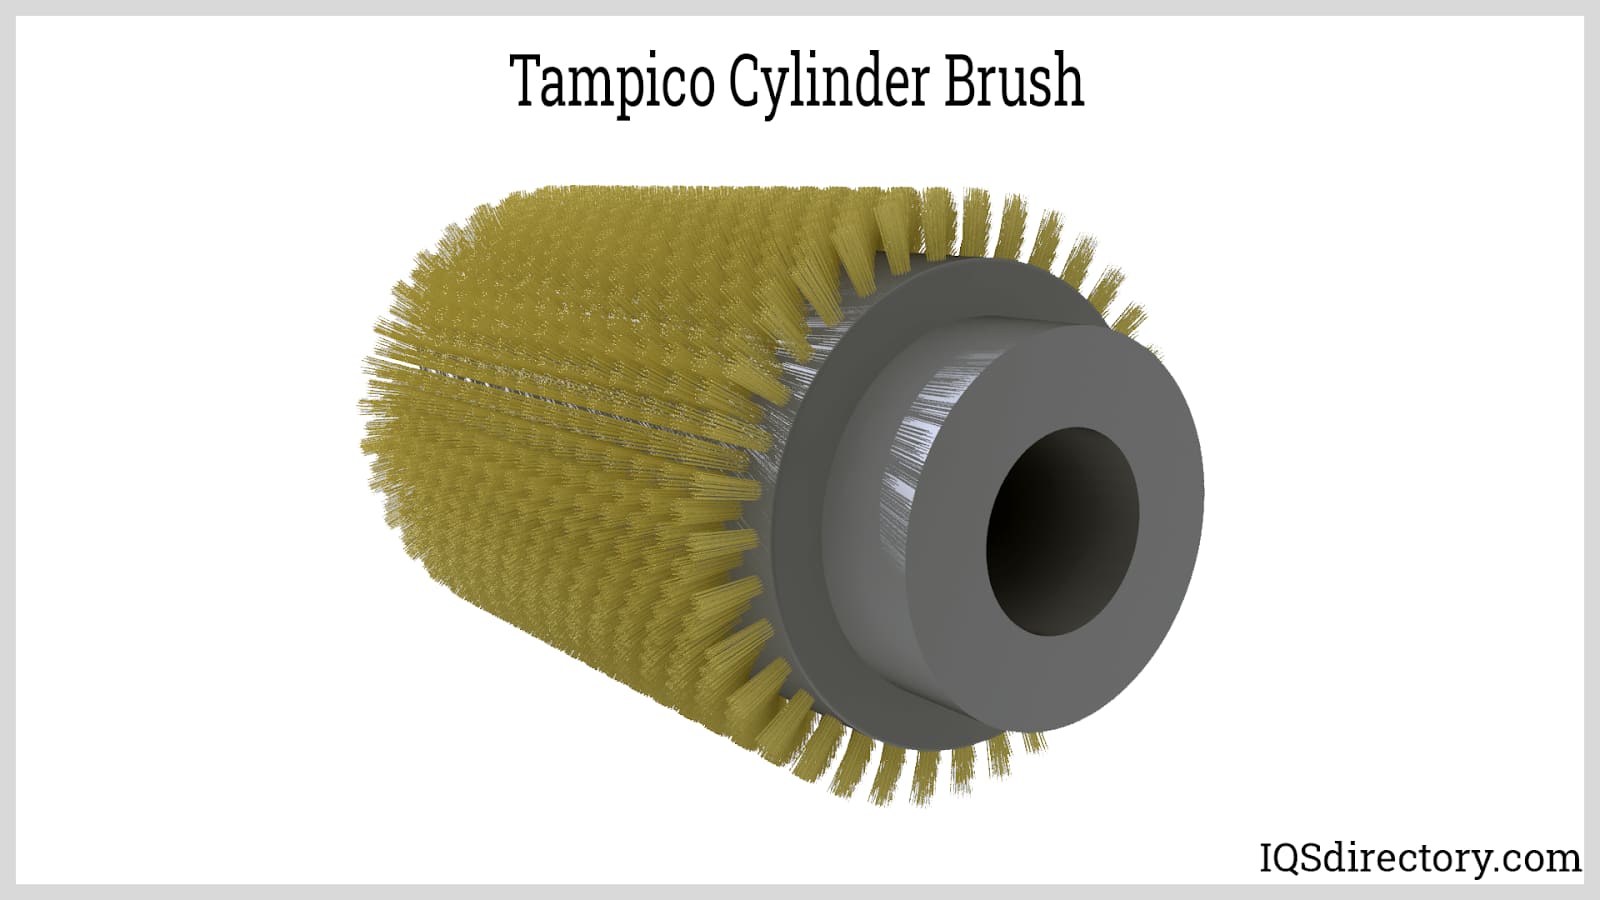 Tampico Cylinder Brush